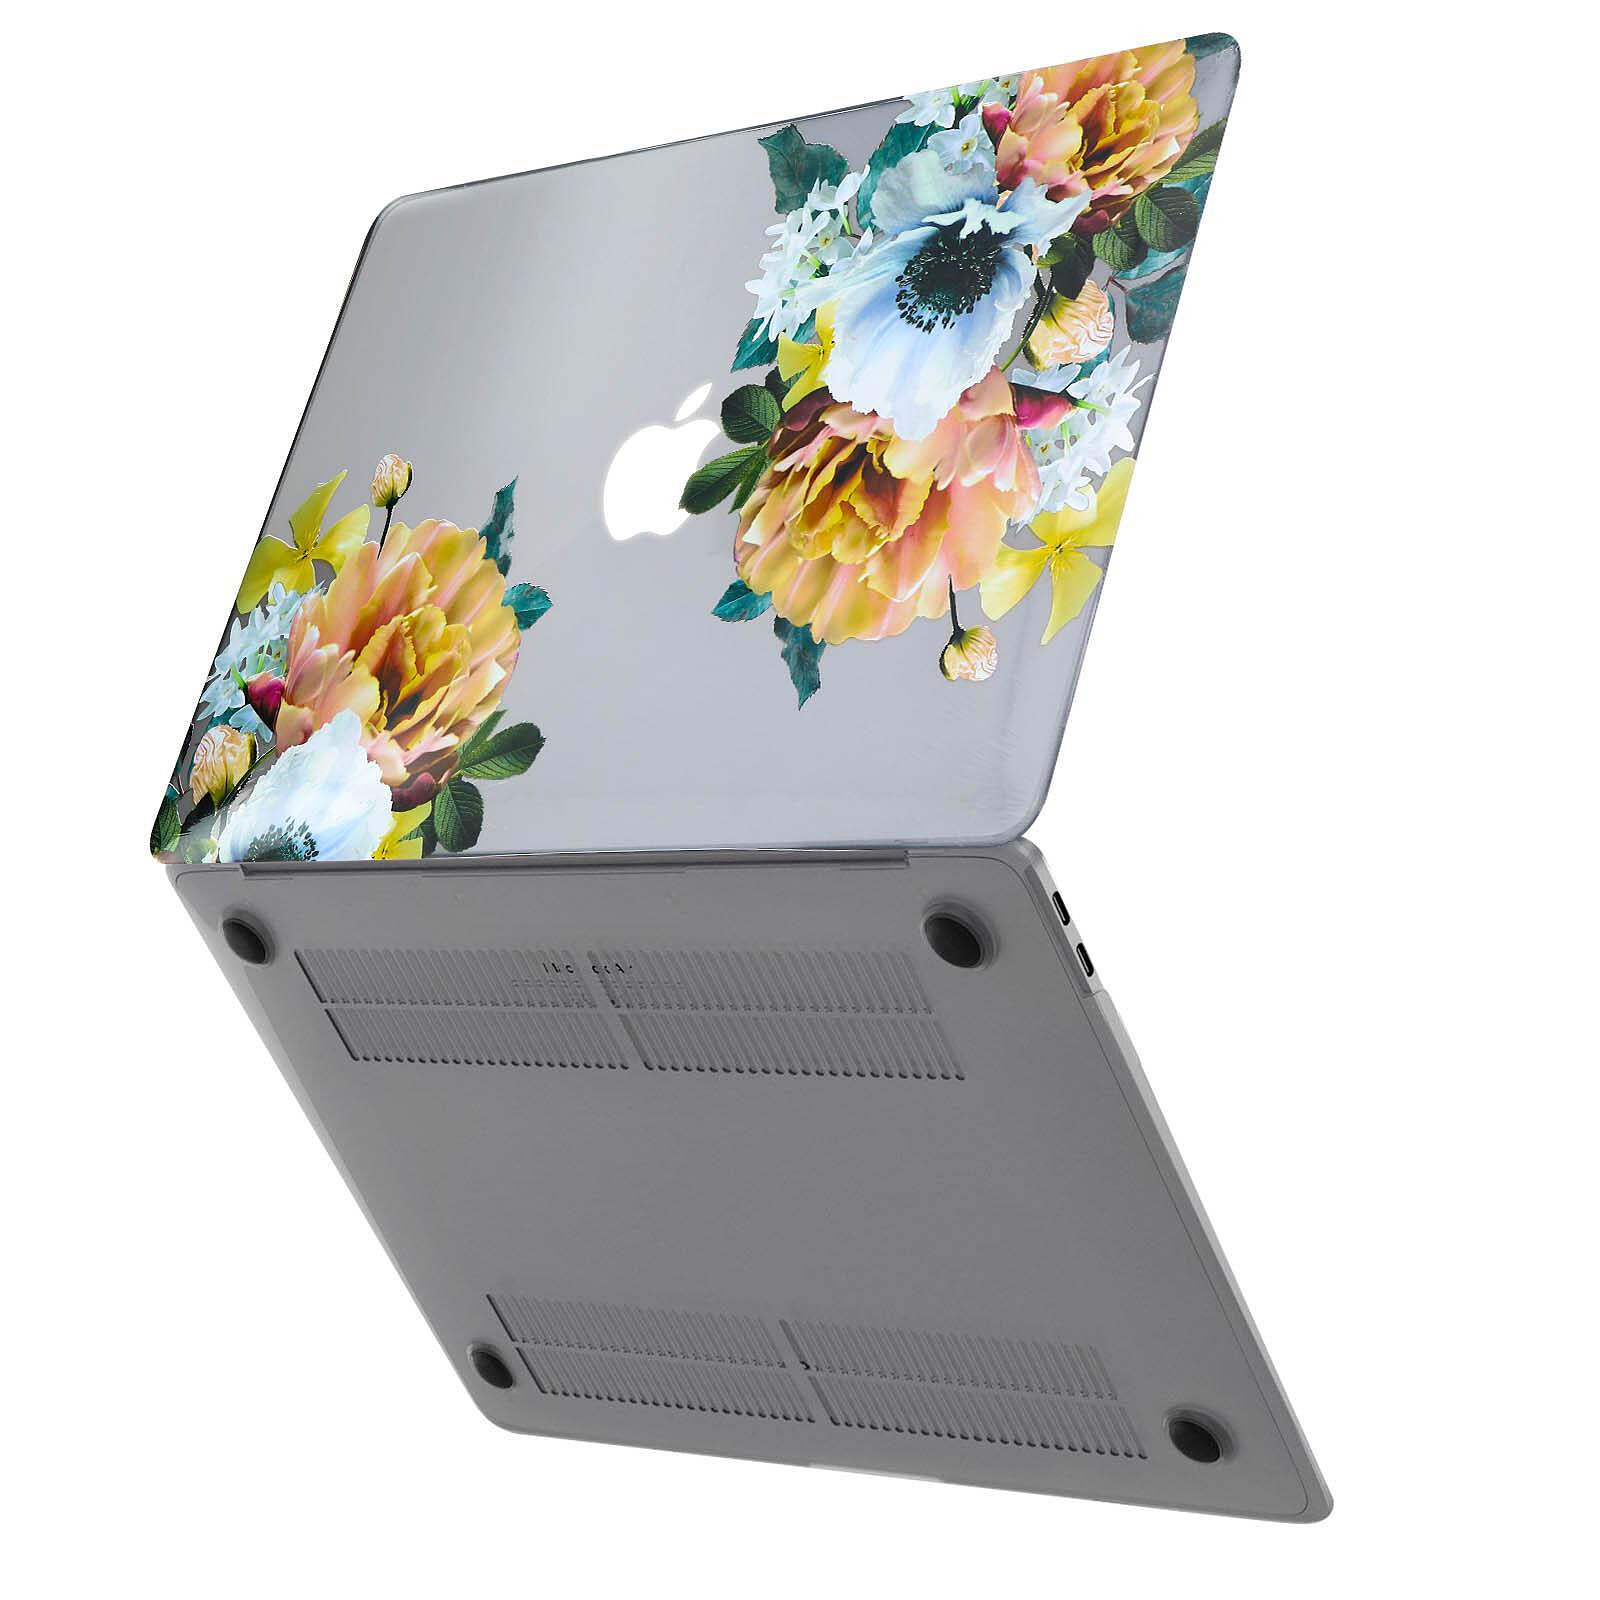 2019/2018, Touch ID Marbre Blanc Rose KECC MacBook Air 13 Retina Coque Rigide Case Cover pour MacBook Air 13.3 Coque {A1932} 